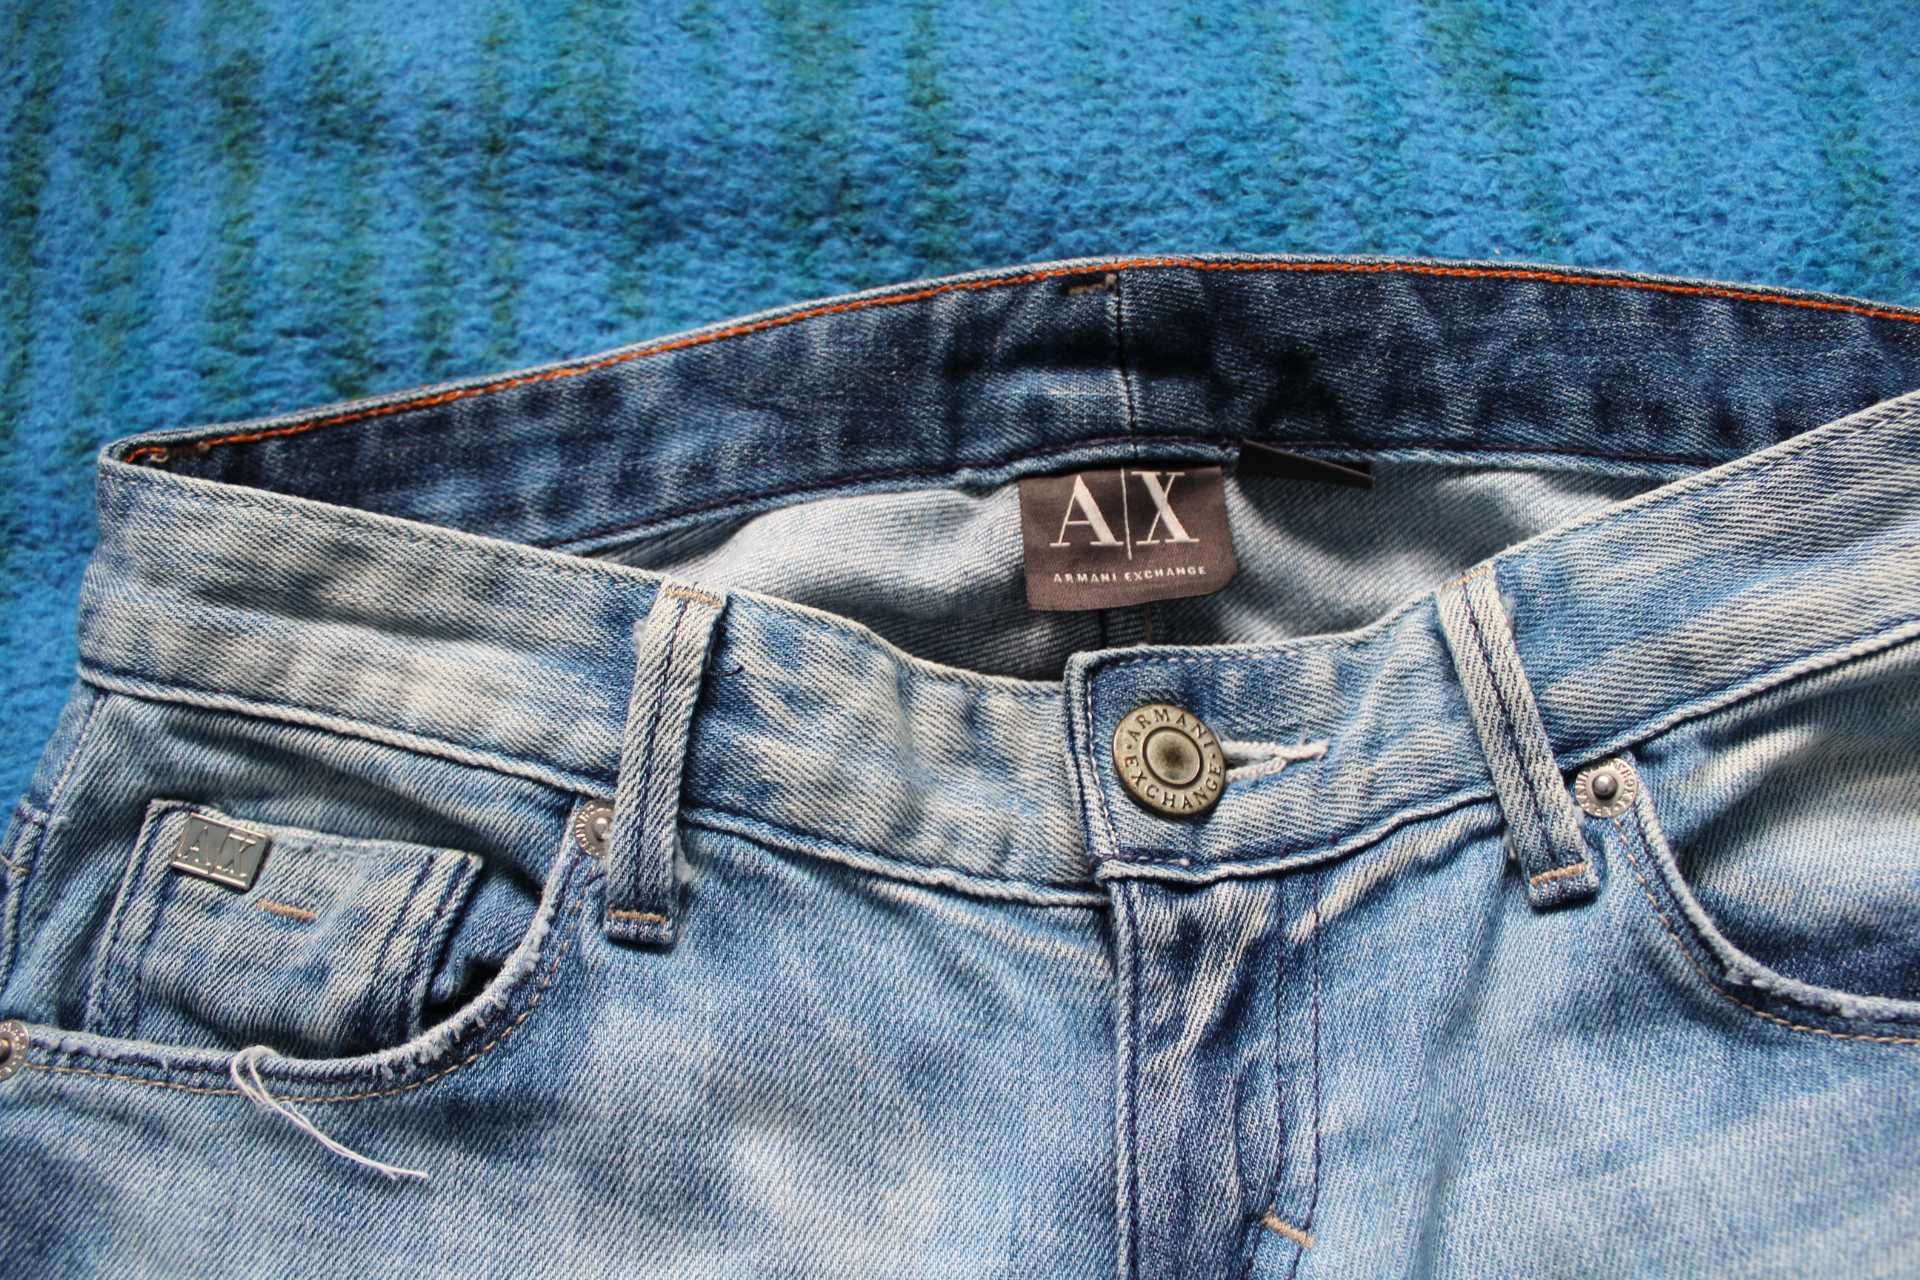 Blugi S si camasa XL Armani Exchange AX Potassium Armani Jeans